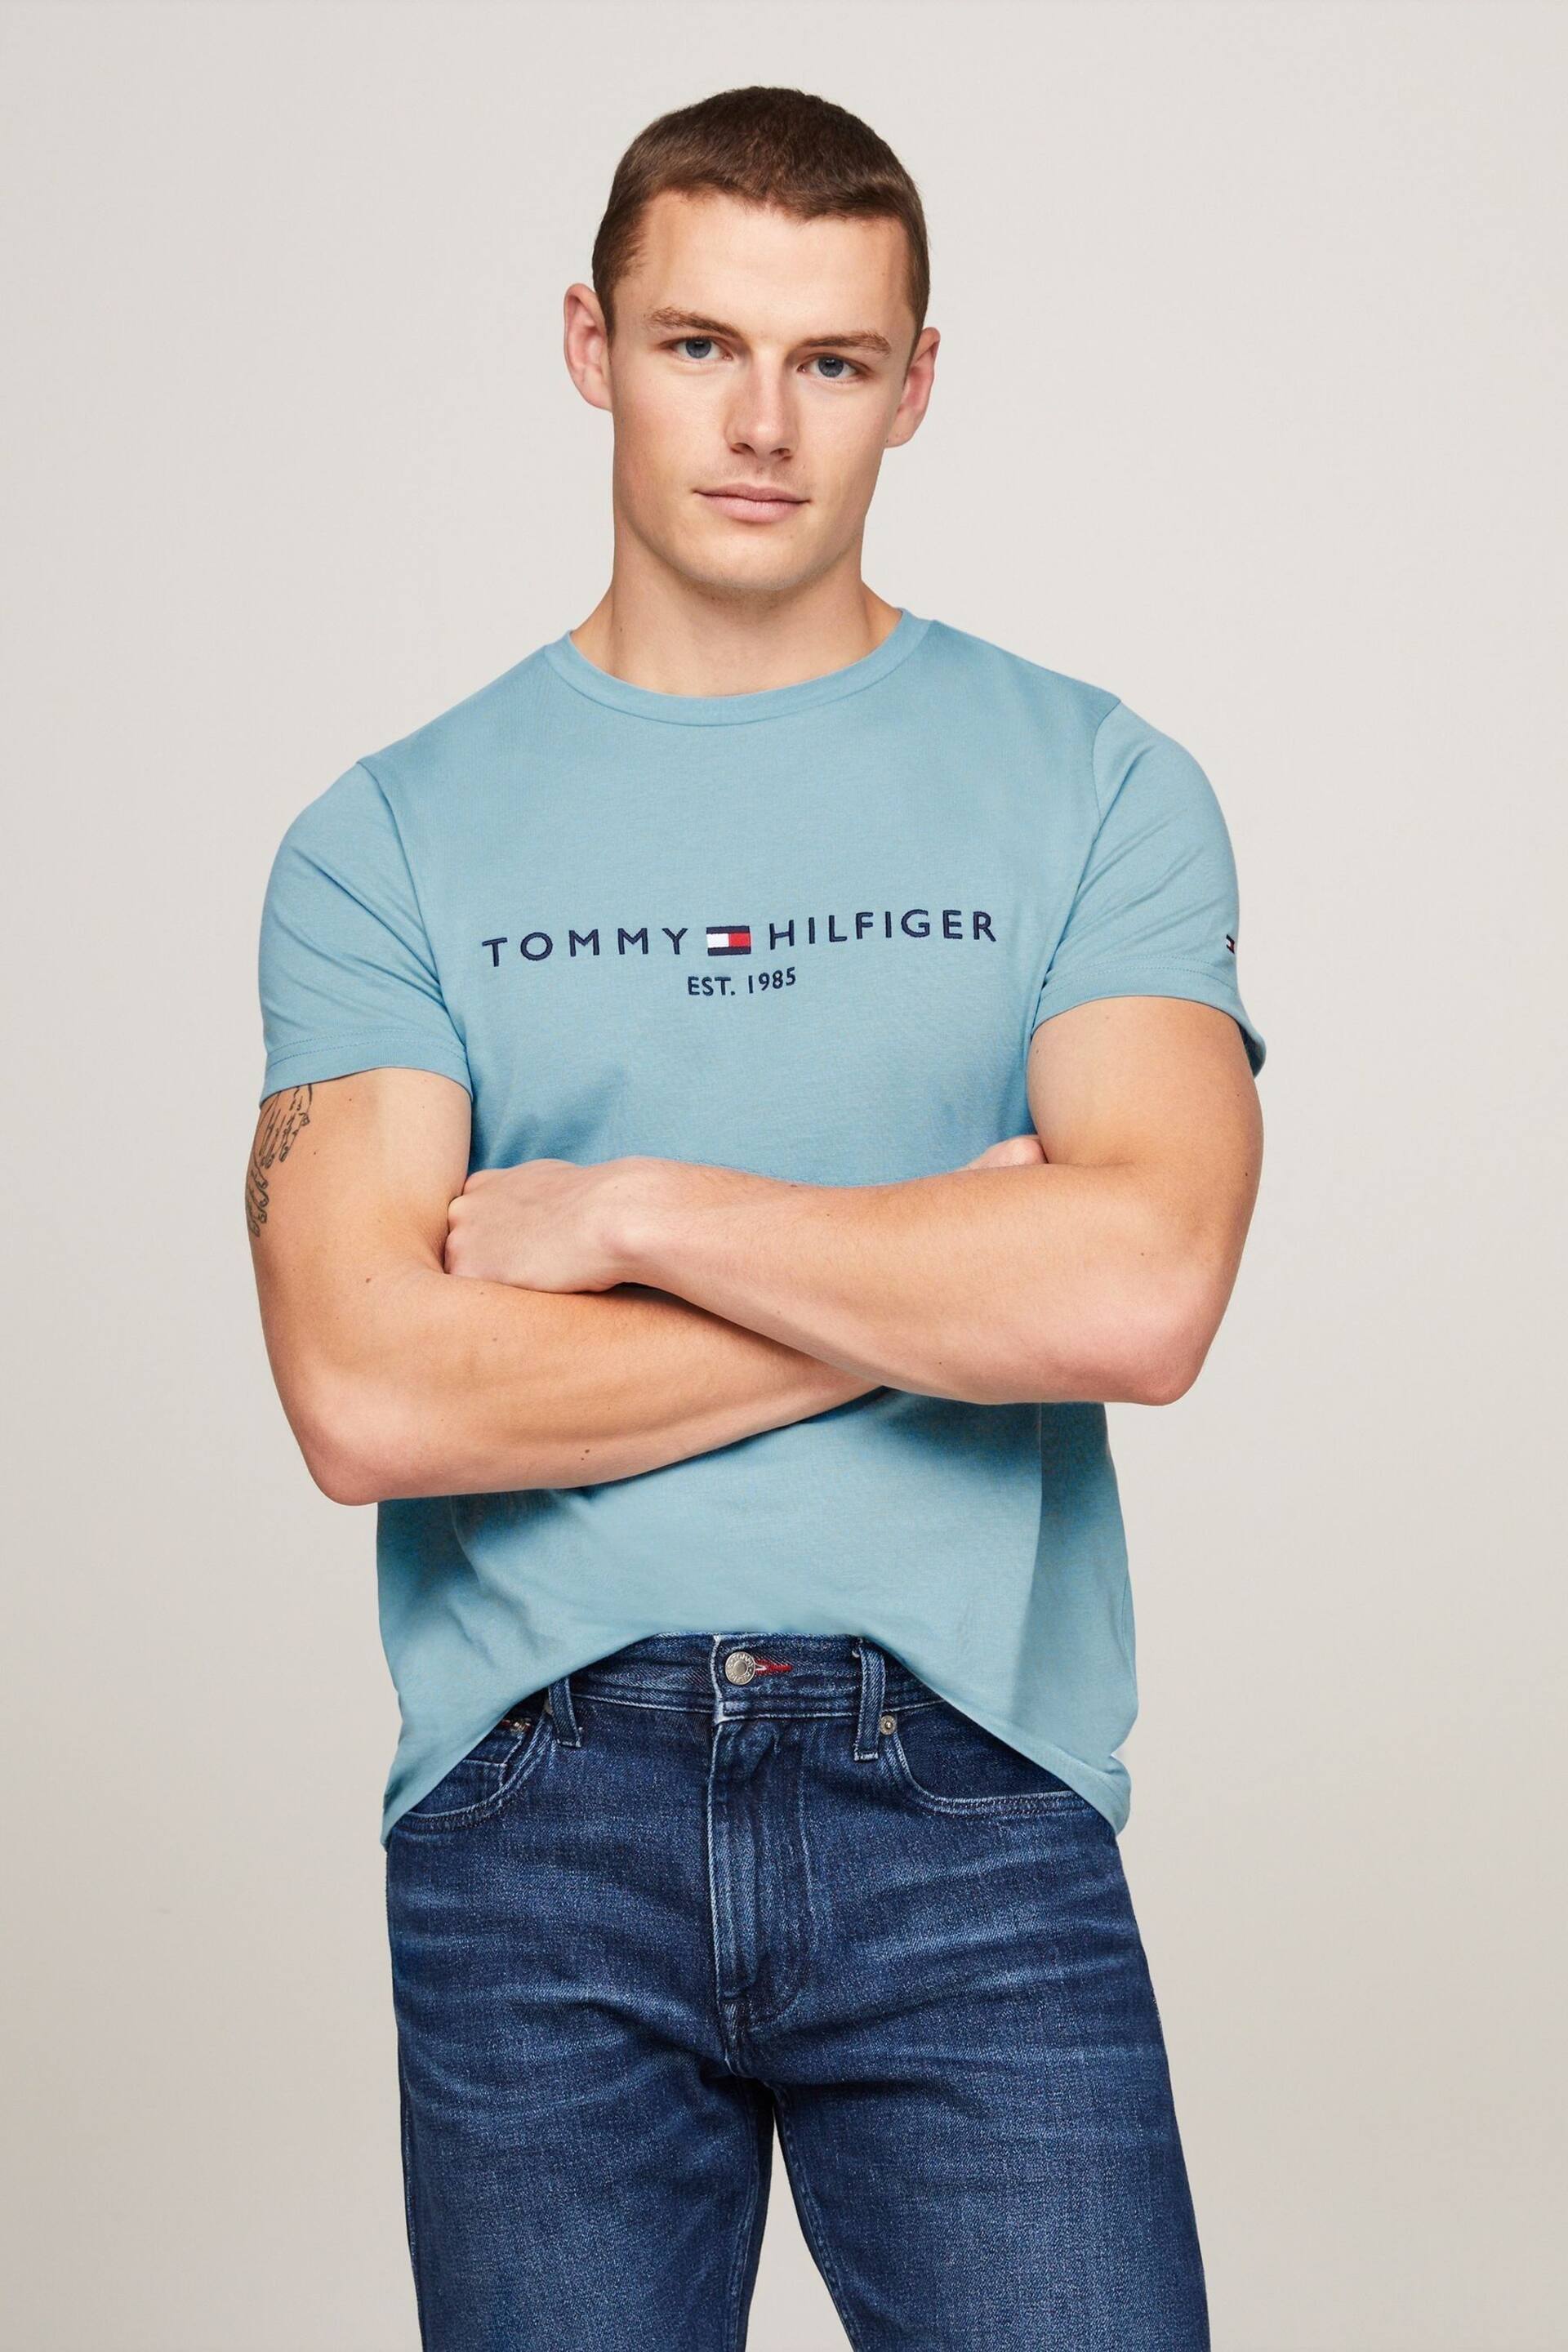 Tommy Hilfiger Bluye Logo T-Shirt - Image 1 of 4